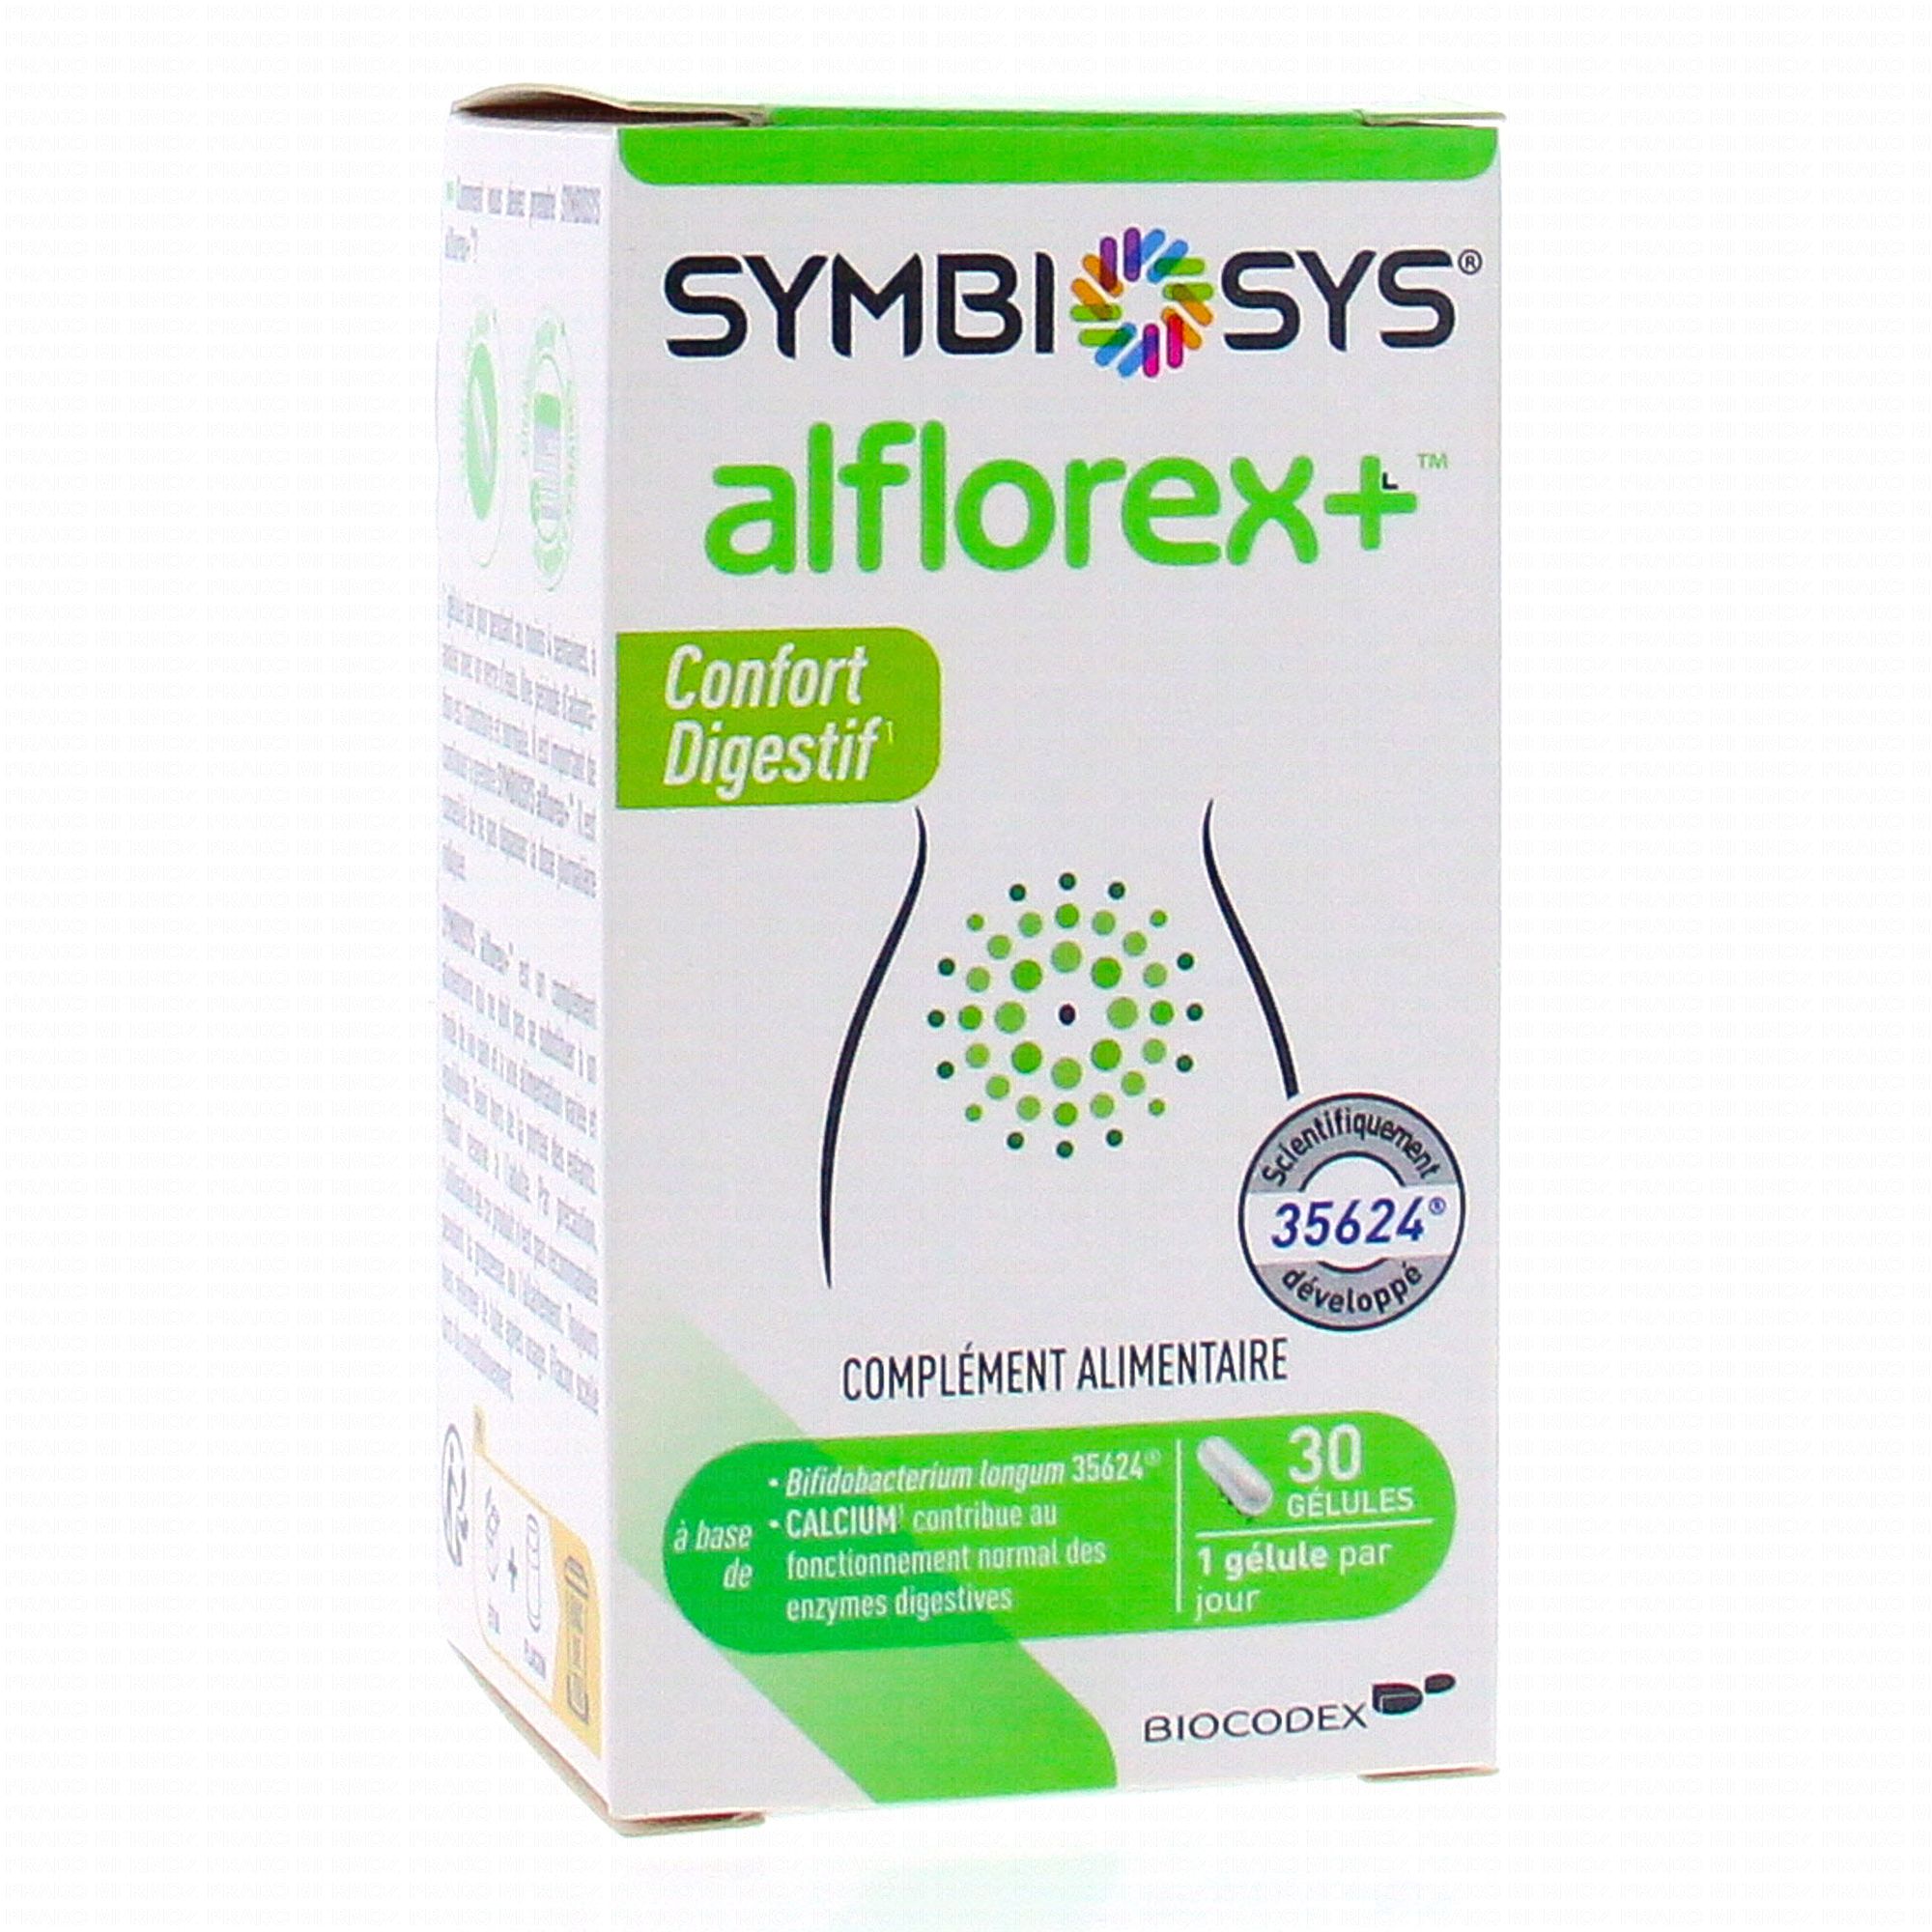 BIOCODEX Ultra Gyn 10 ovules - Pharmacie Prado Mermoz